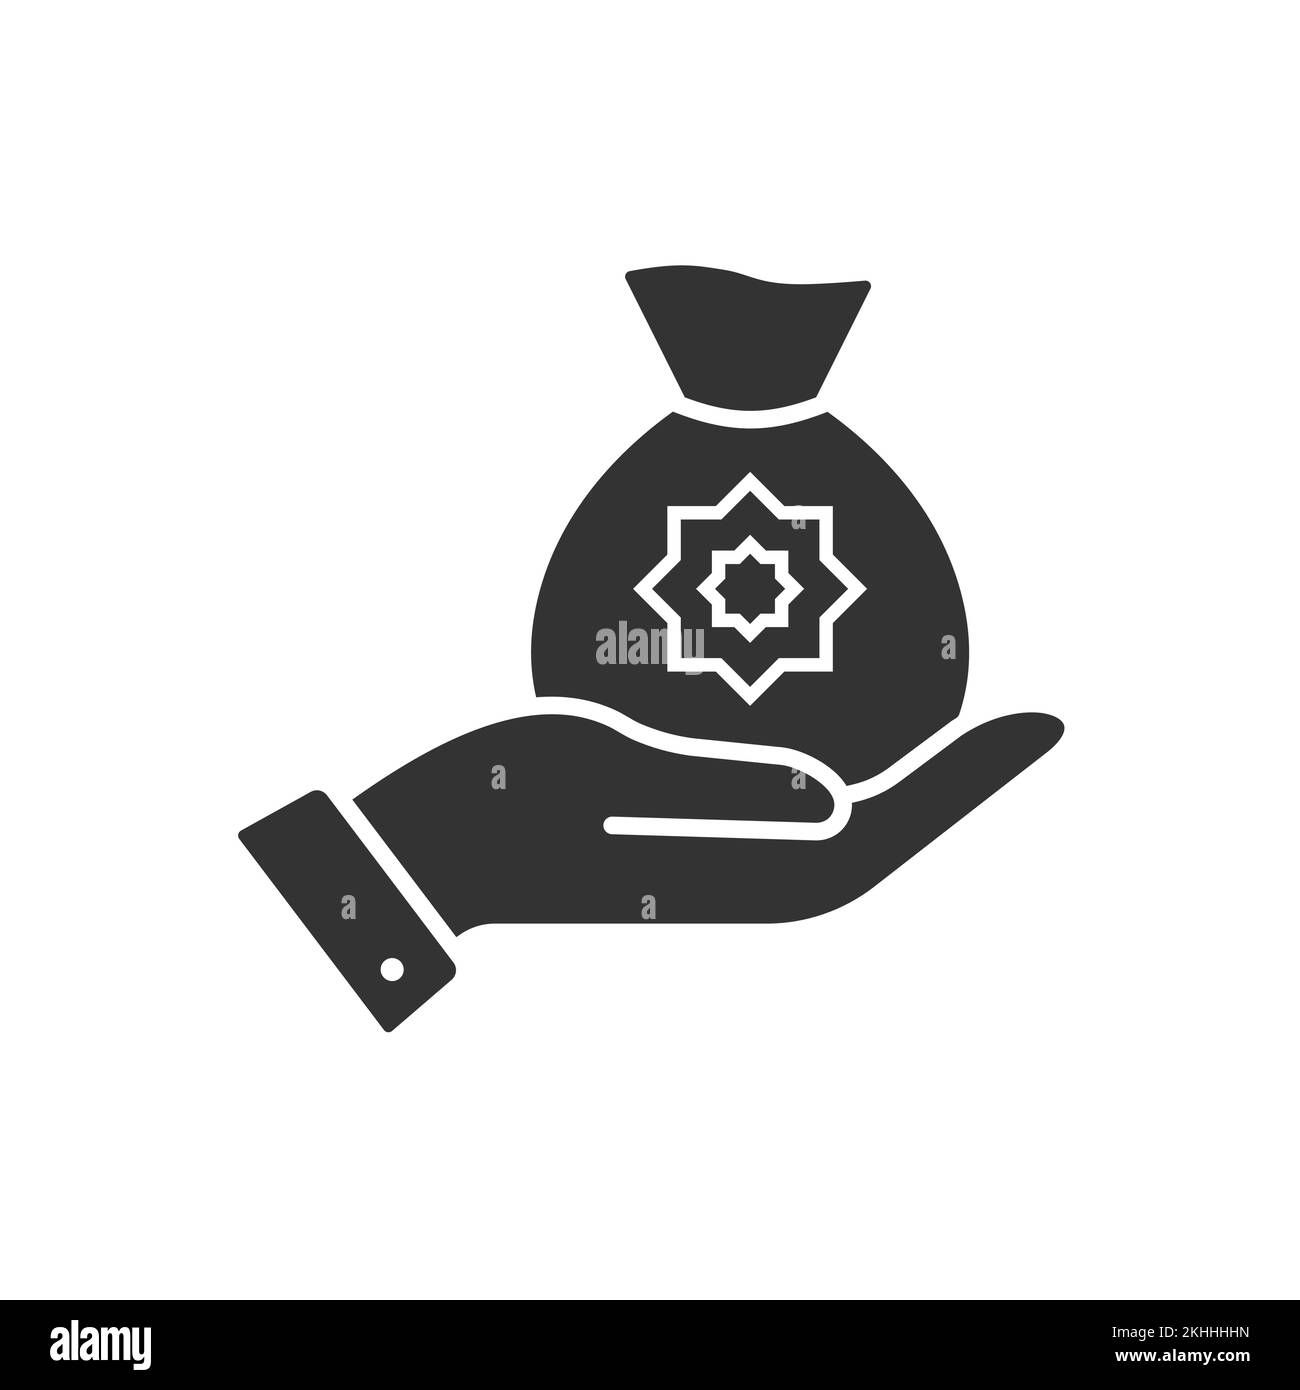 Zakat glyph icon. Black vector illustration isolated on white background. Stock Vector